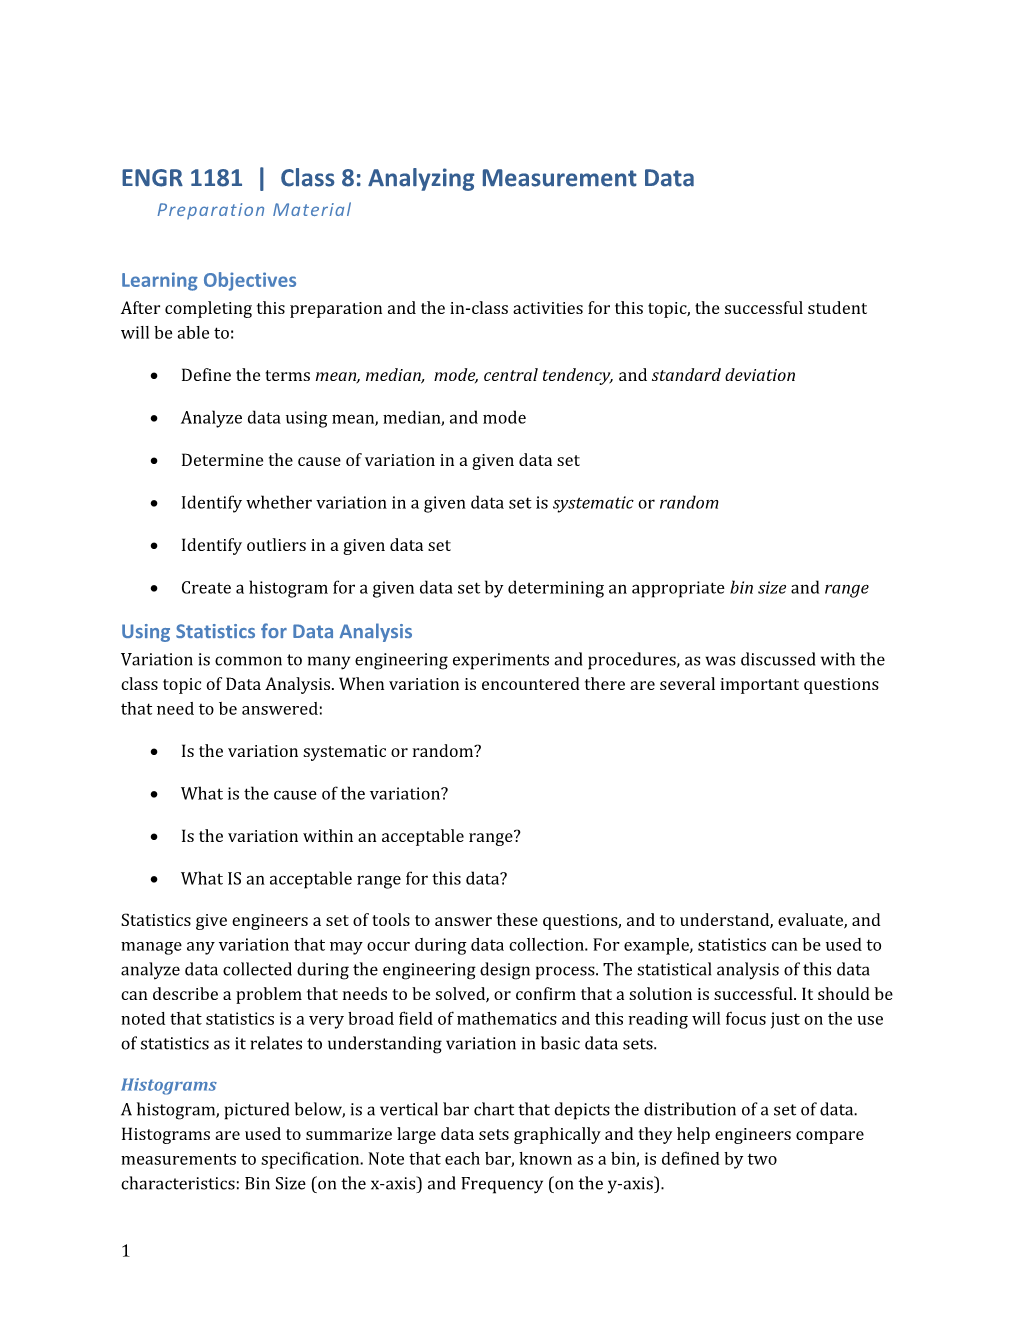 ENGR 1181 Class 8: Analyzing Measurement Datapreparation Material